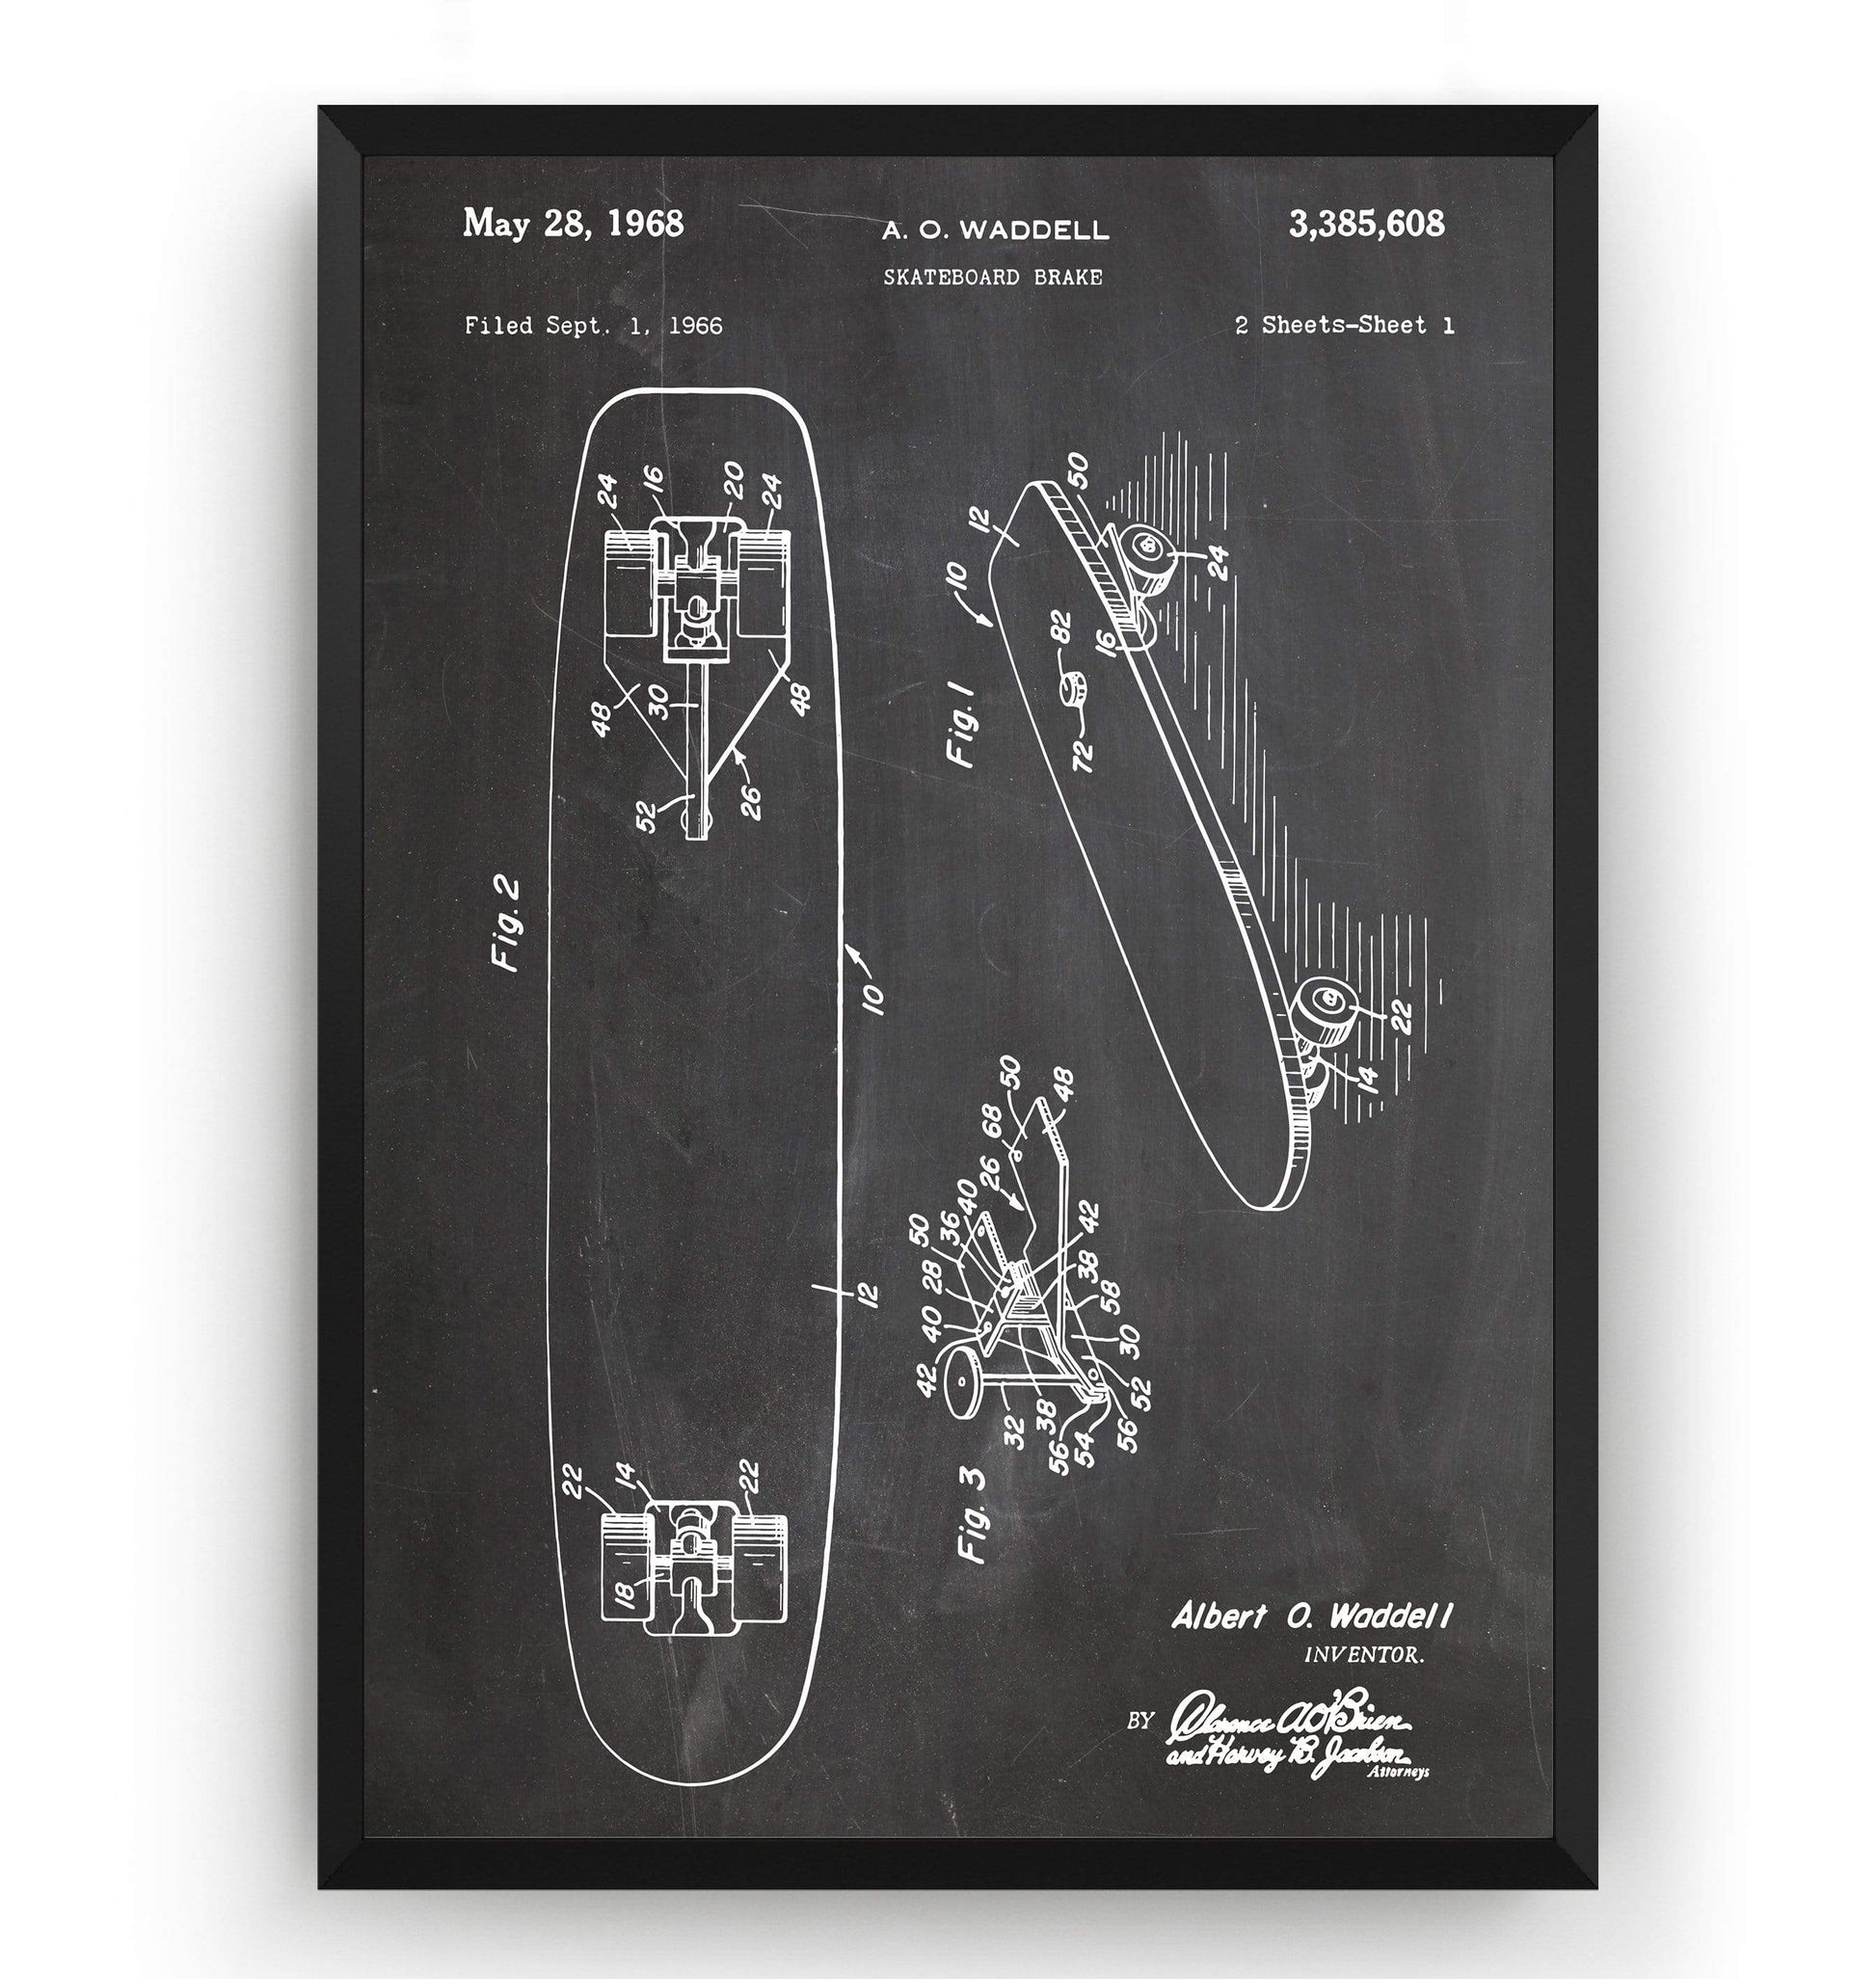 Skateboard Brake 1968 Patent Print - Magic Posters